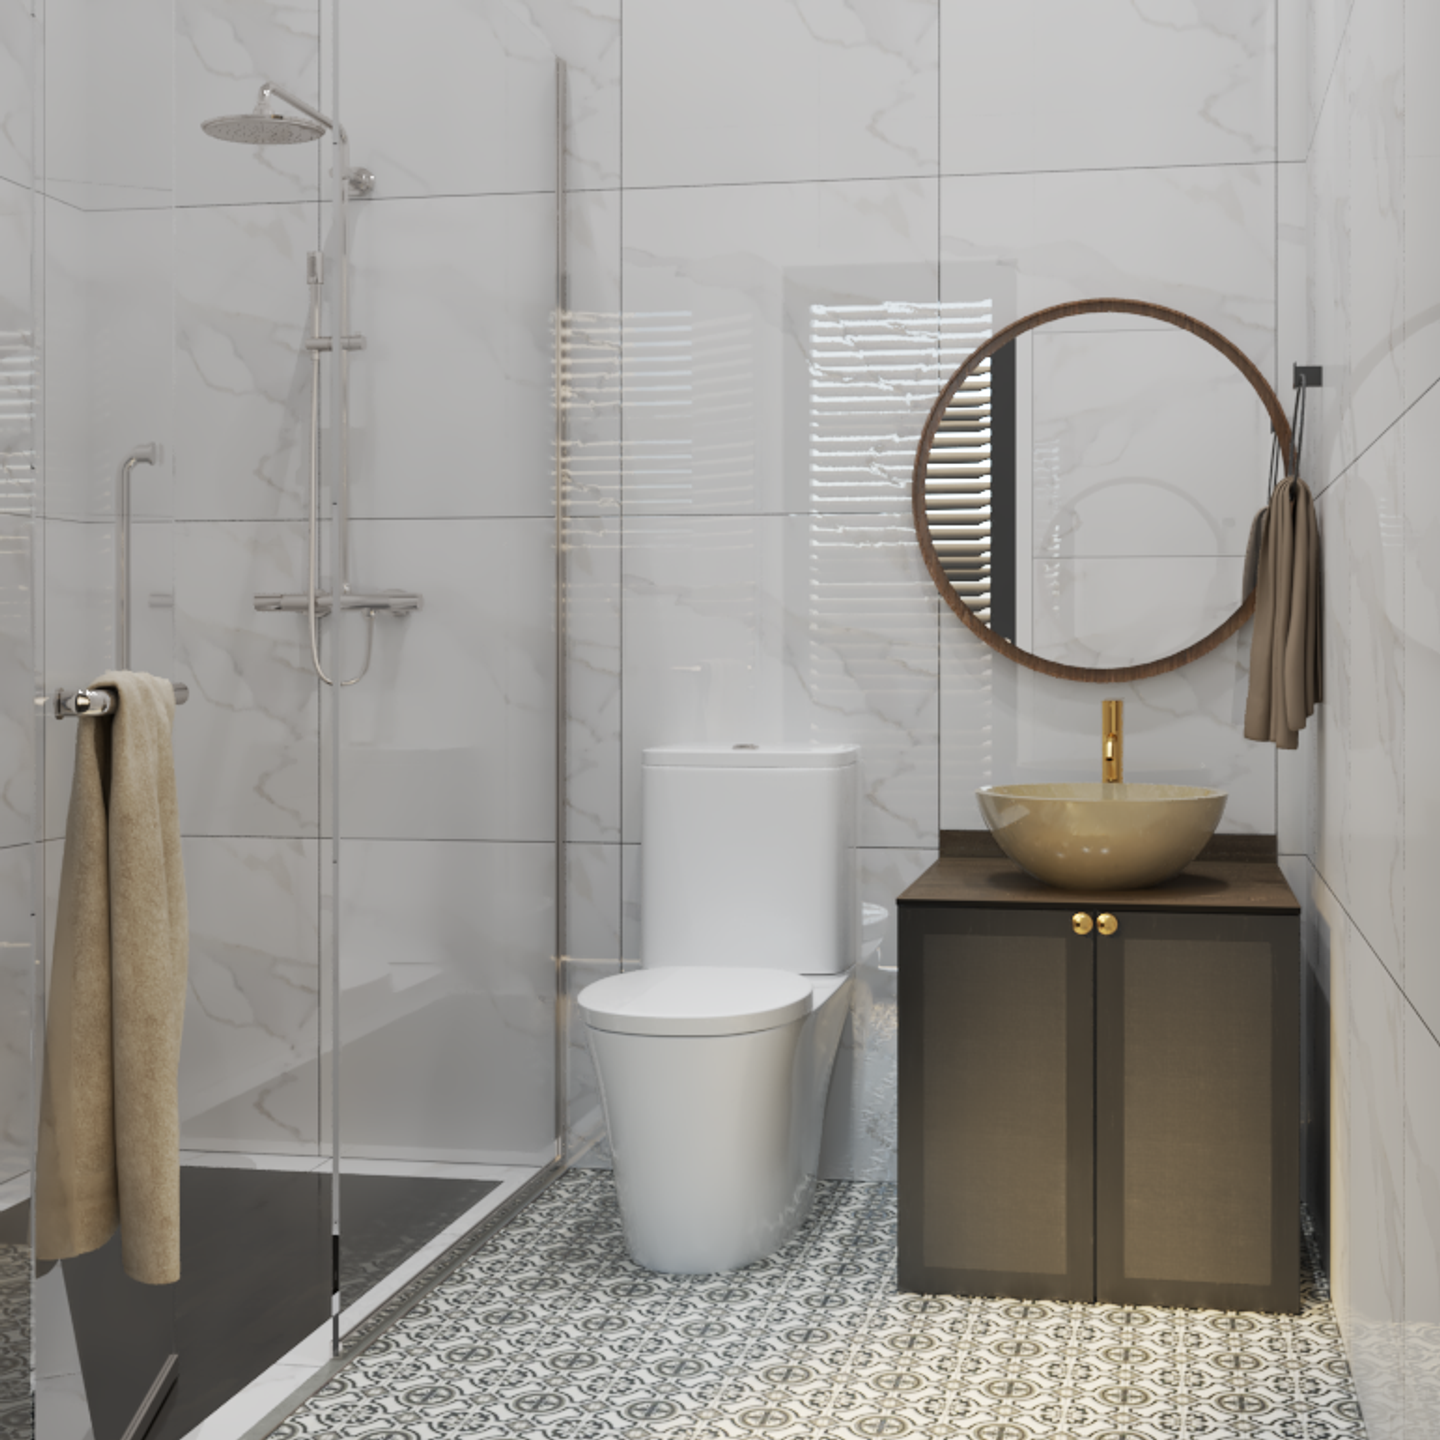 Mid-Century Modern Compact Toilet Design with Round Mirror - Livspace